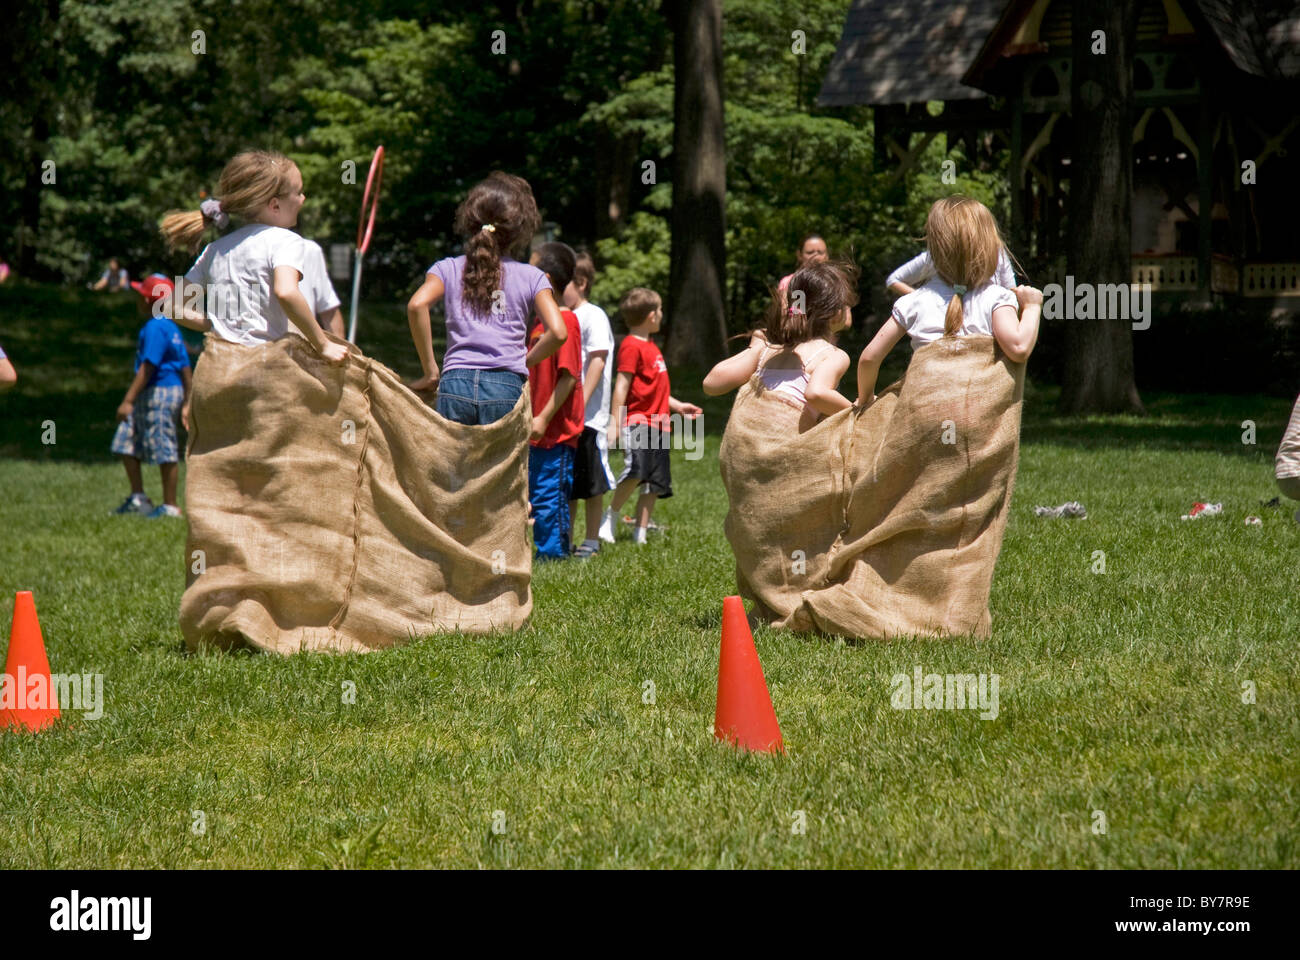 Children having Sack race in the park Stock Photo